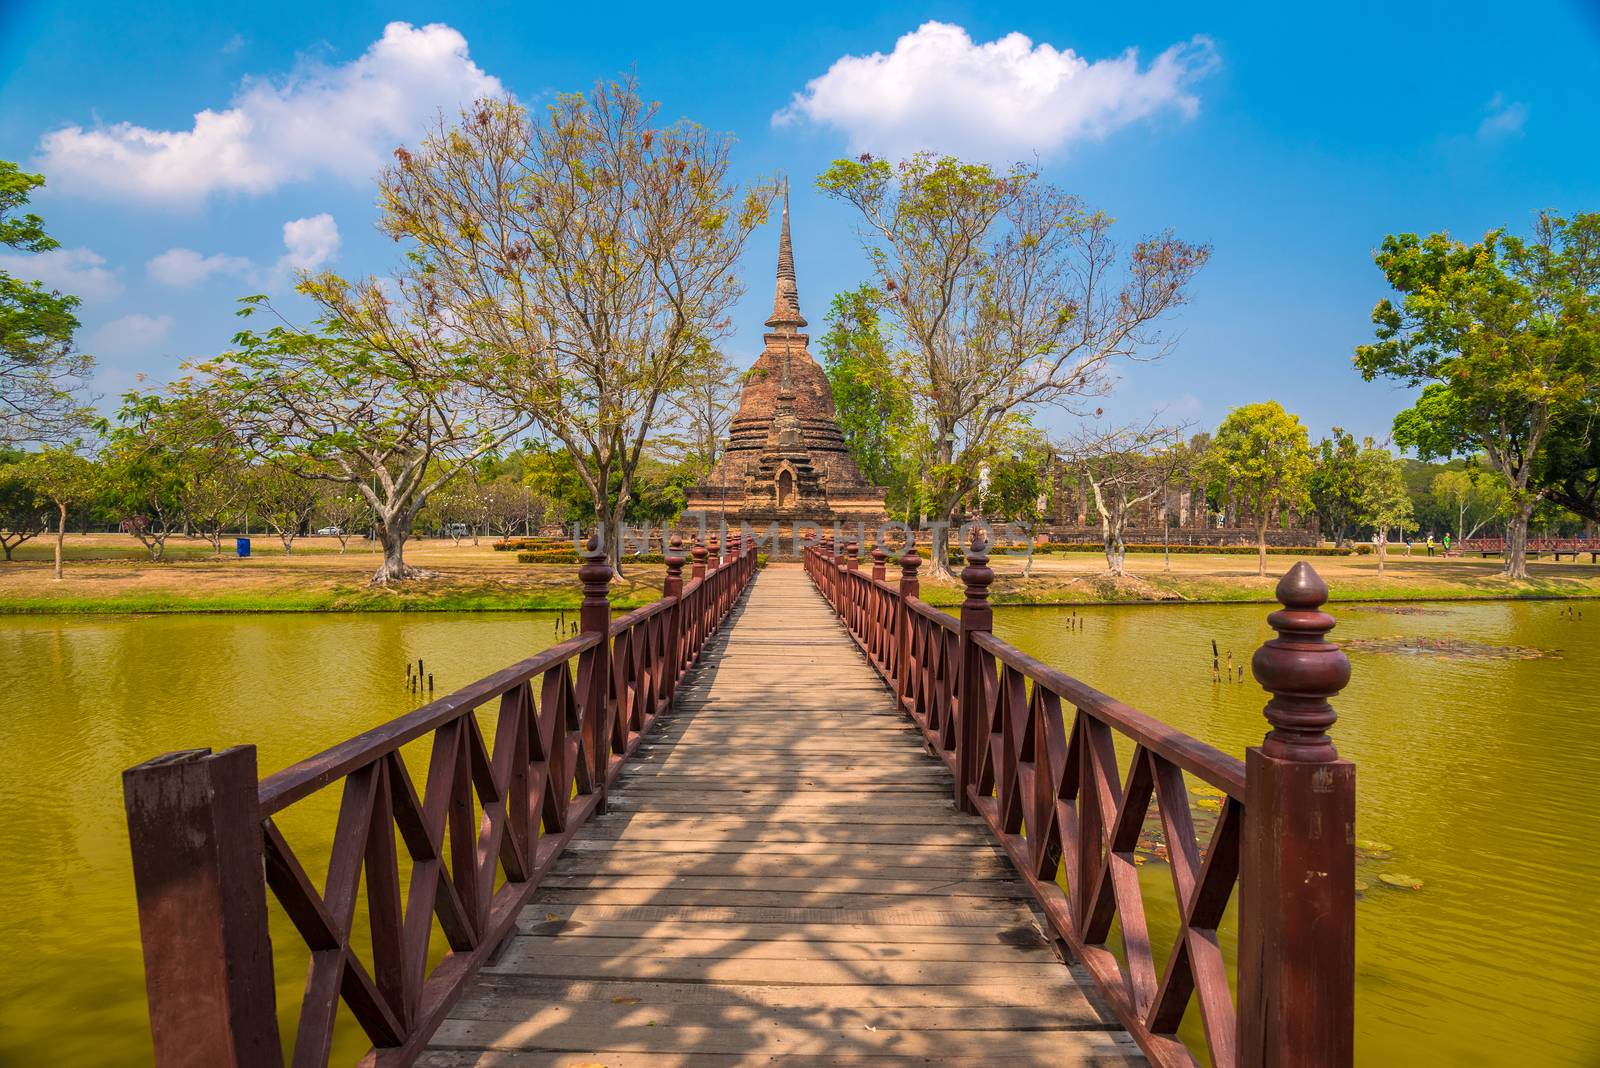 Wooden bridge leading to ancient Stupa at Wat Sa Sri in Sukhothai Historical Park, Thailand.